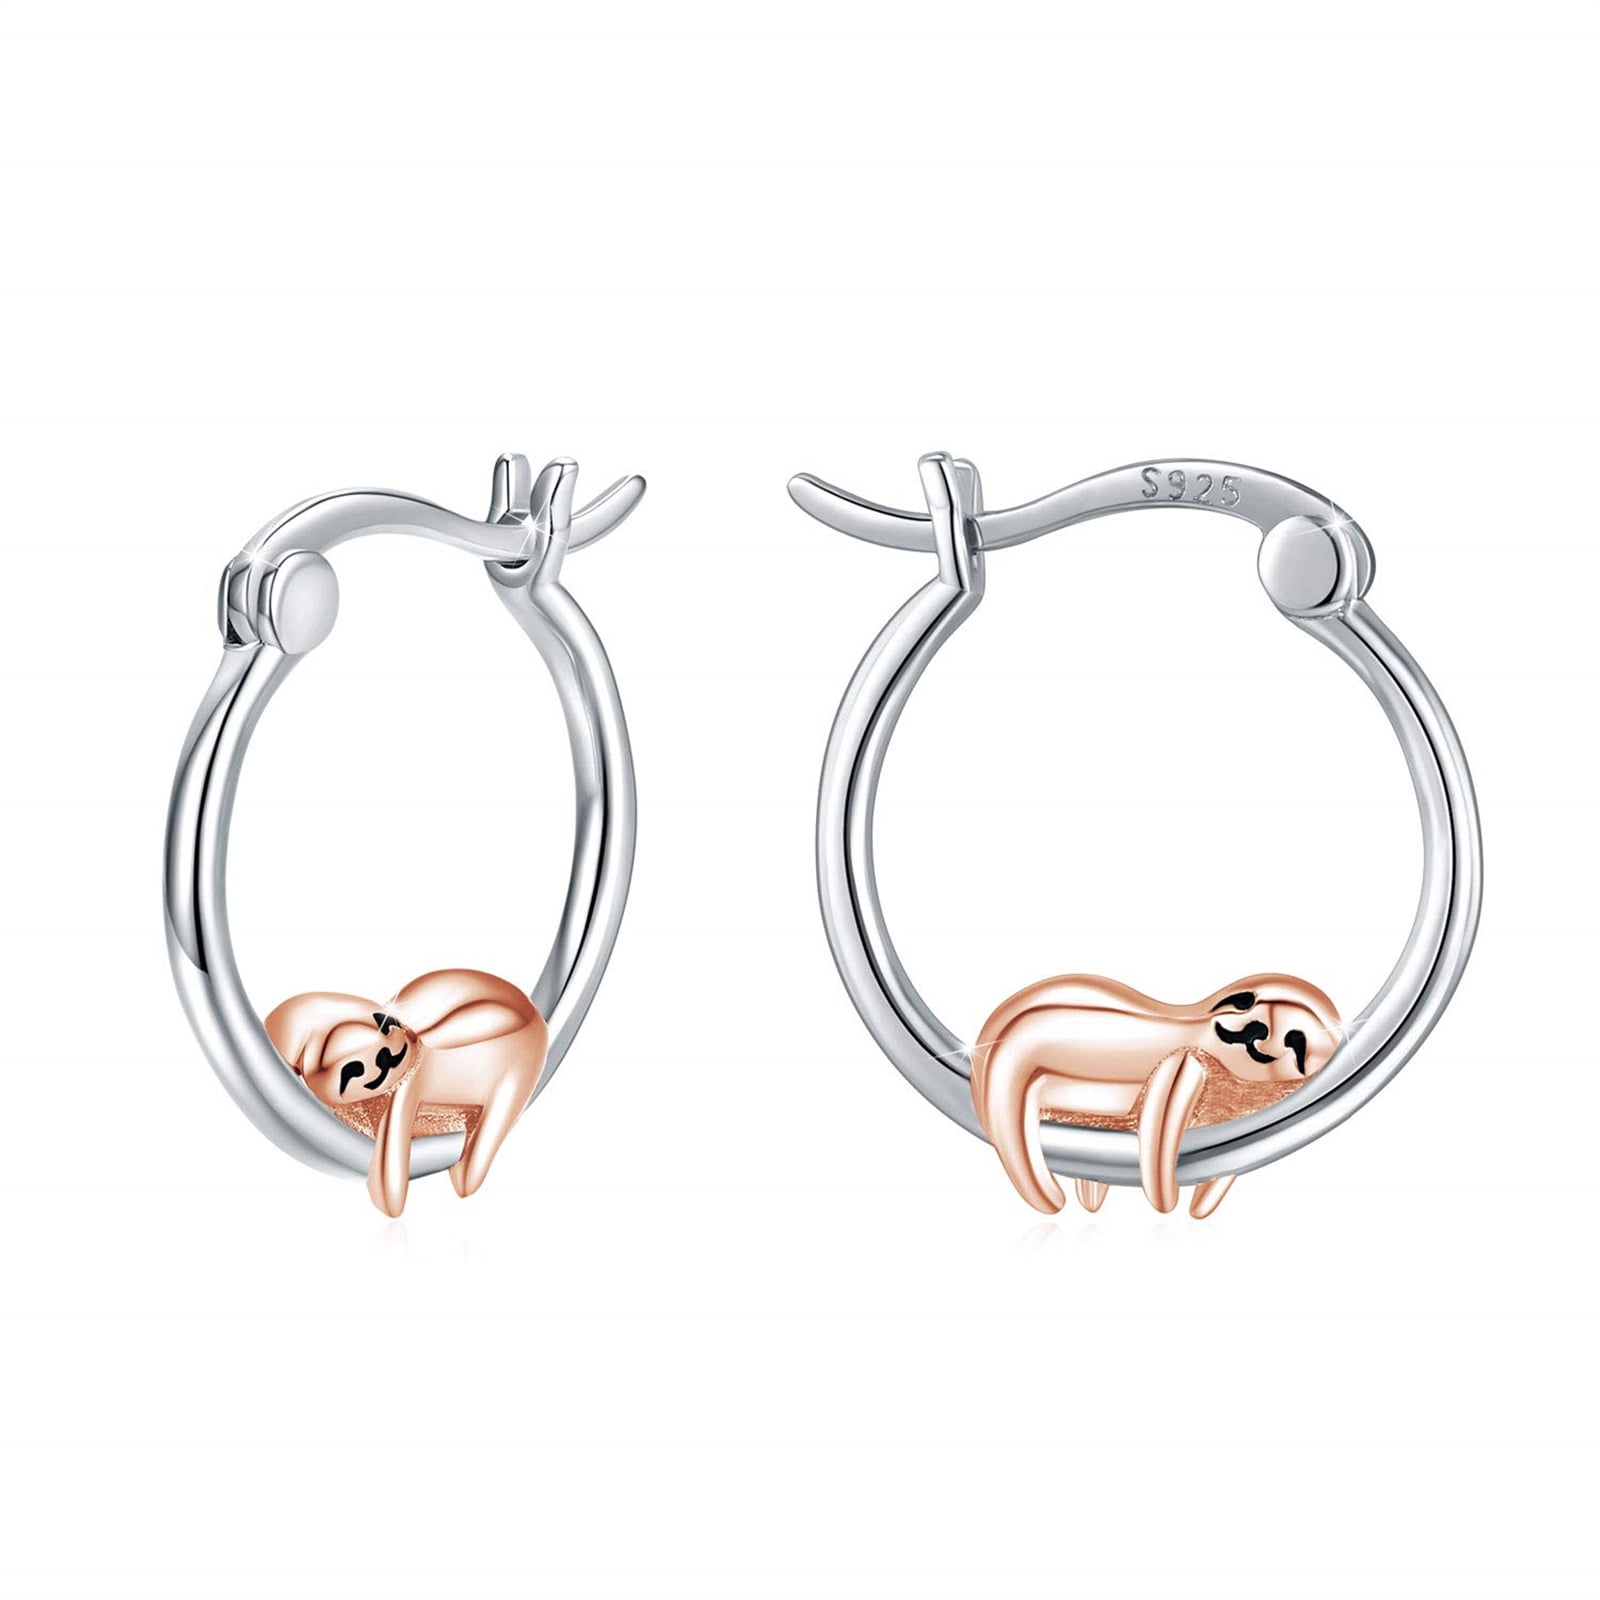 Cartilage Earring Stud 925 Sterling Silver Stud Earrings Hypoallergenic Earrings for Sensitive Ears Come Gift Box